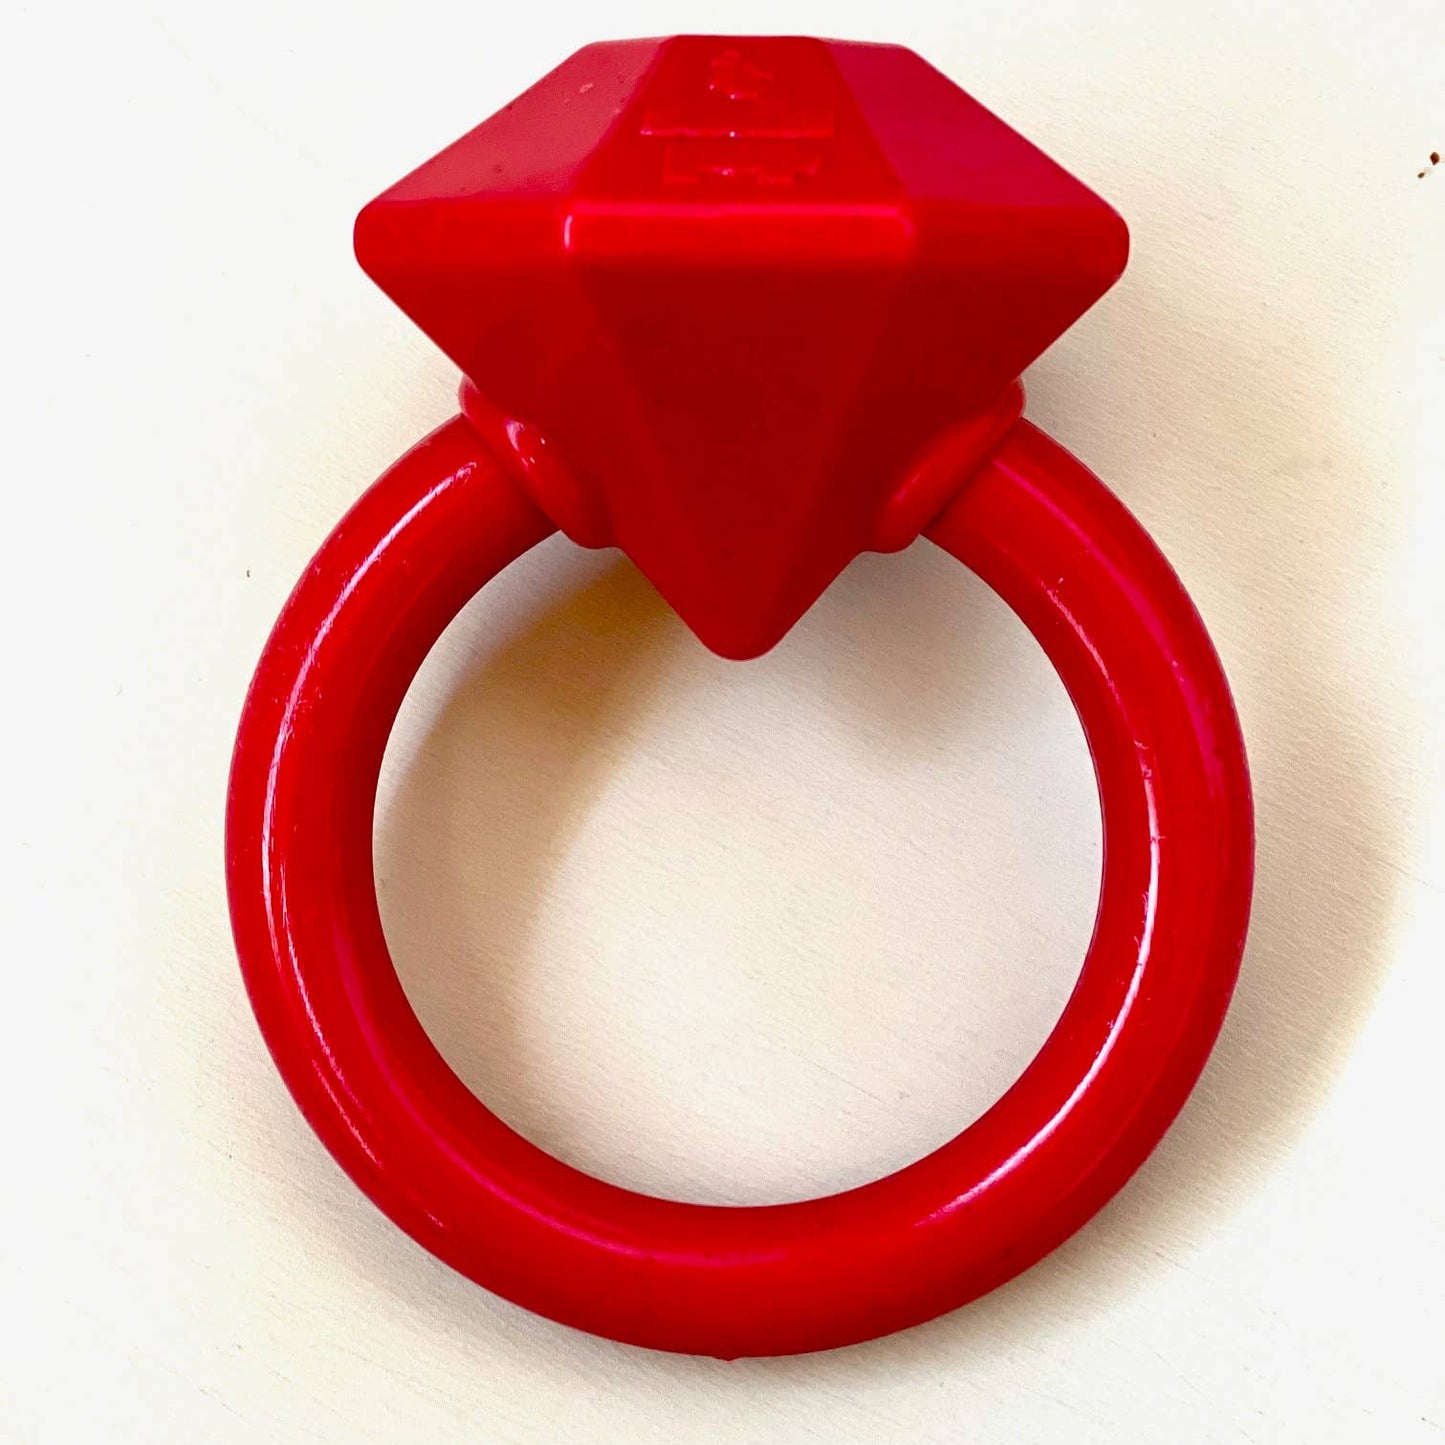 SodaPup Diamond Ring Teething Chew Toy  Image